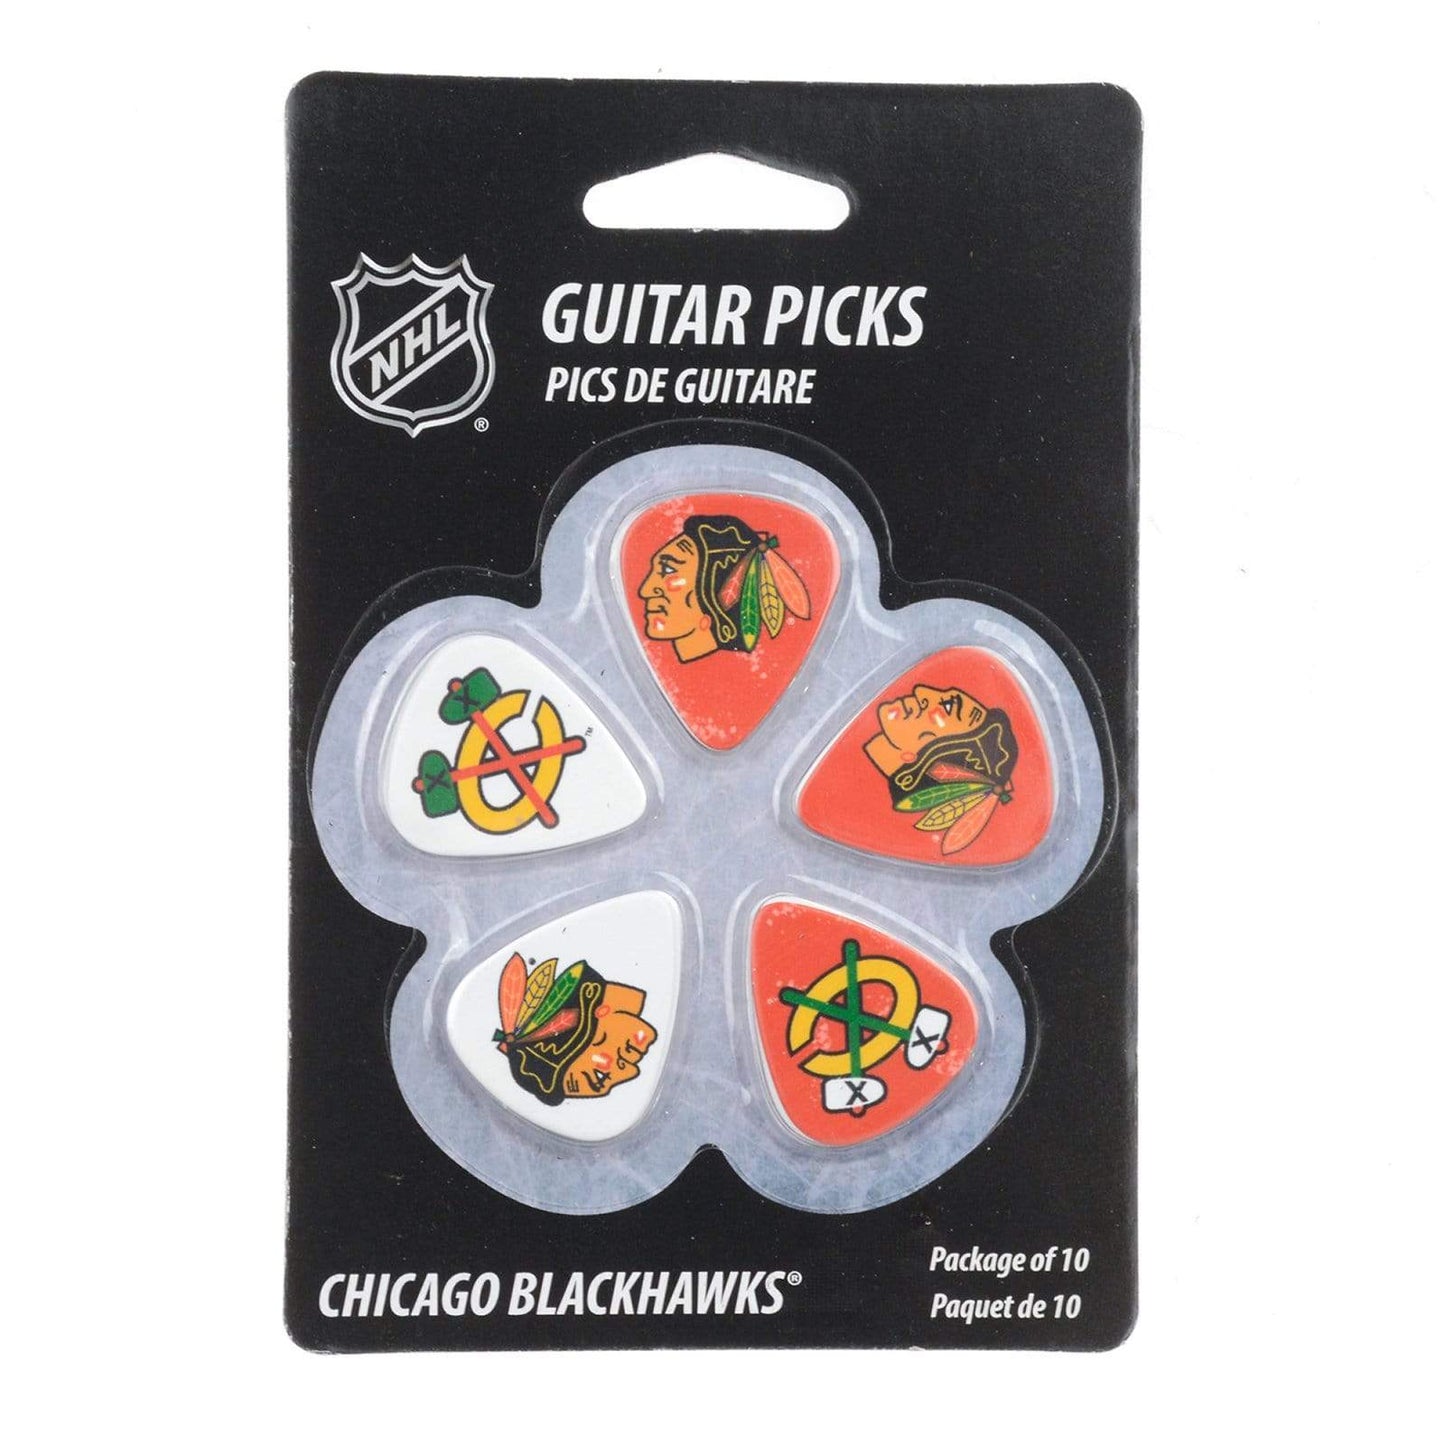 Woodrow Chicago Blackhawks Guitar Picks 5 Pack Accessories / Picks